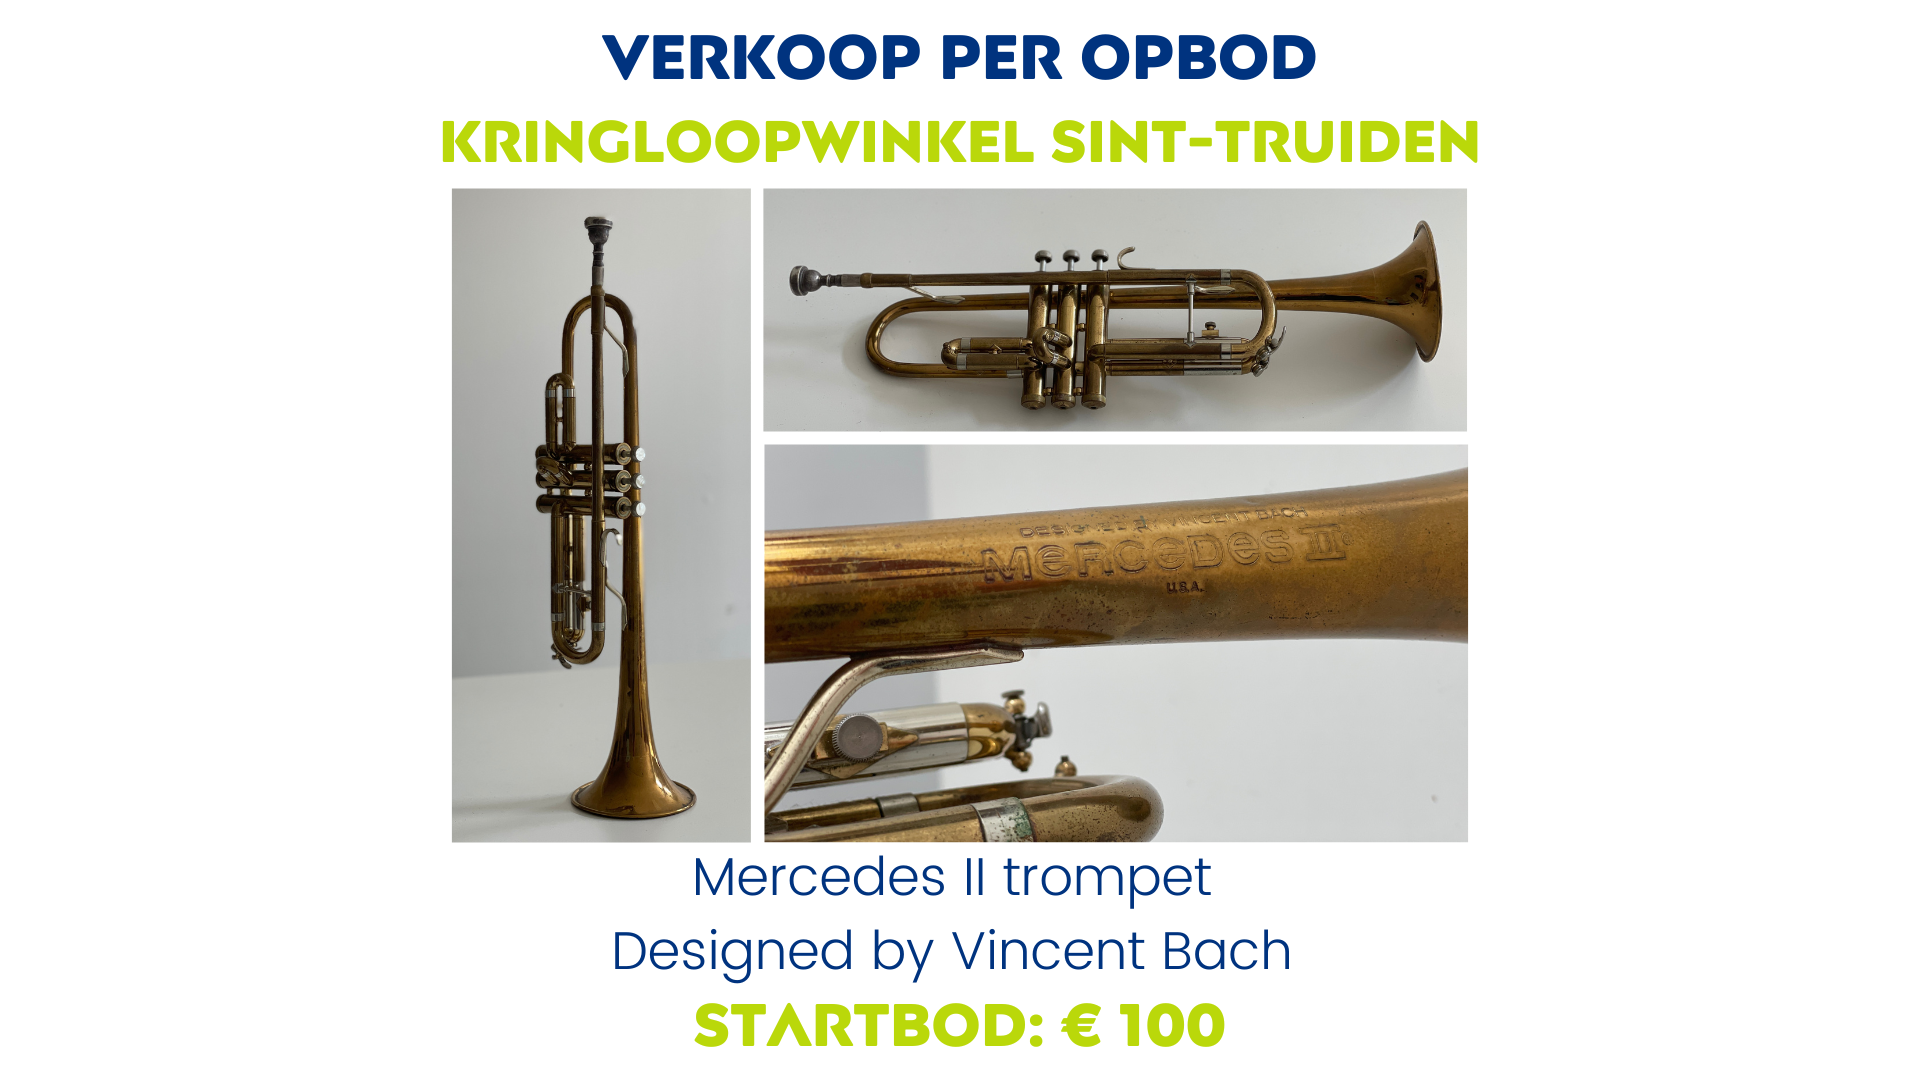 web_verkoop per opbod_ St Truiden_trompet mercedes.png